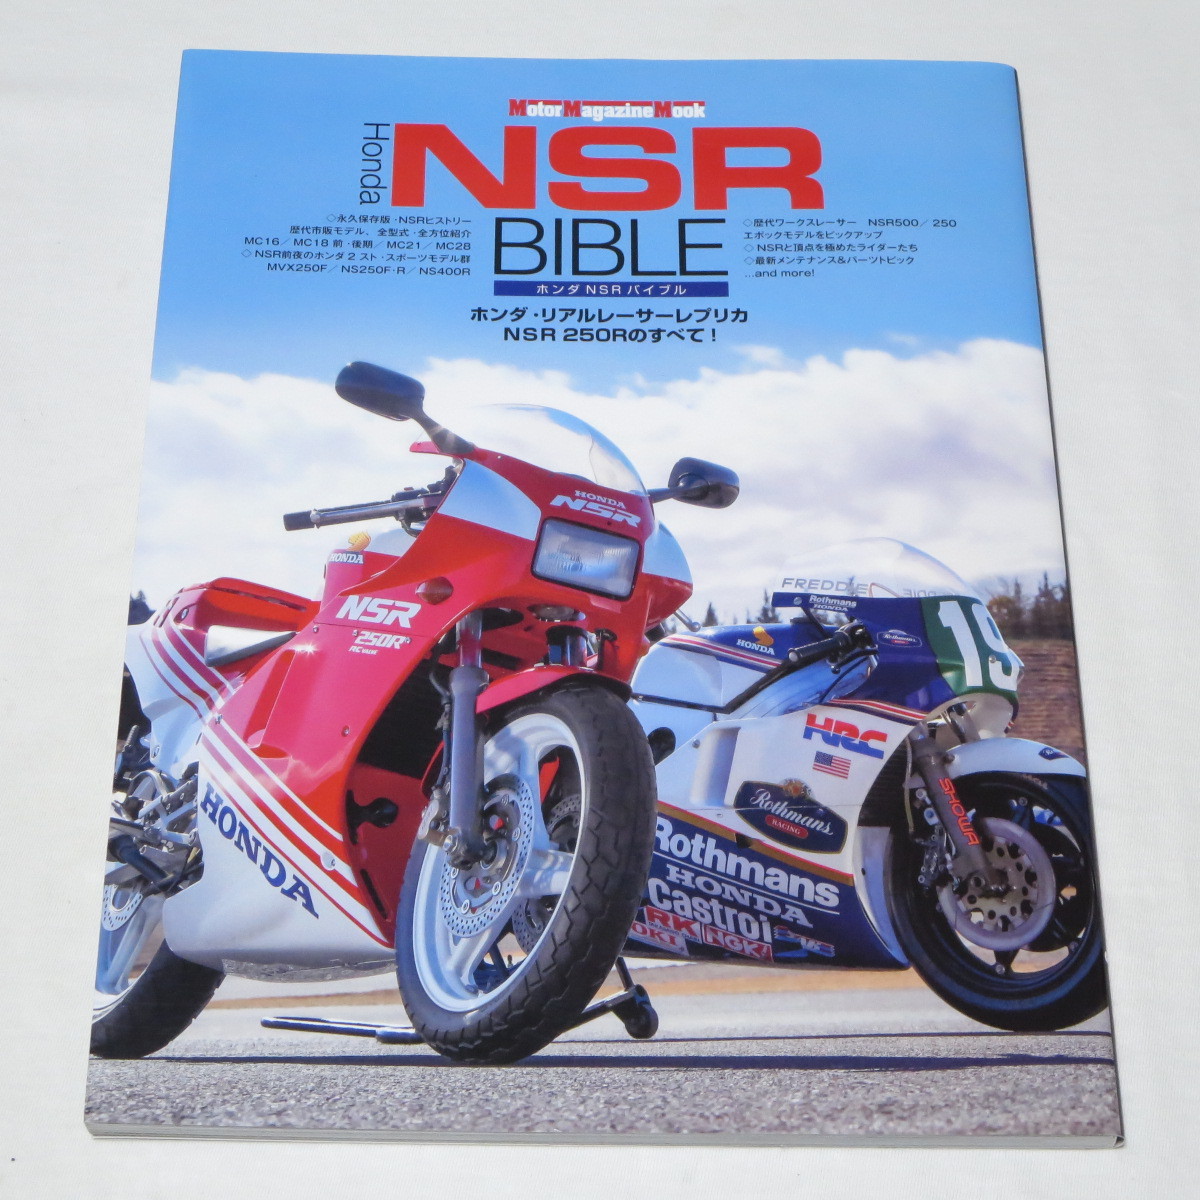 Honda NSR BIBLE “ ザ・リアルレーサーレプリカ Honda NSR 250R のすべて！”(Motor Magazine Mook) の画像1